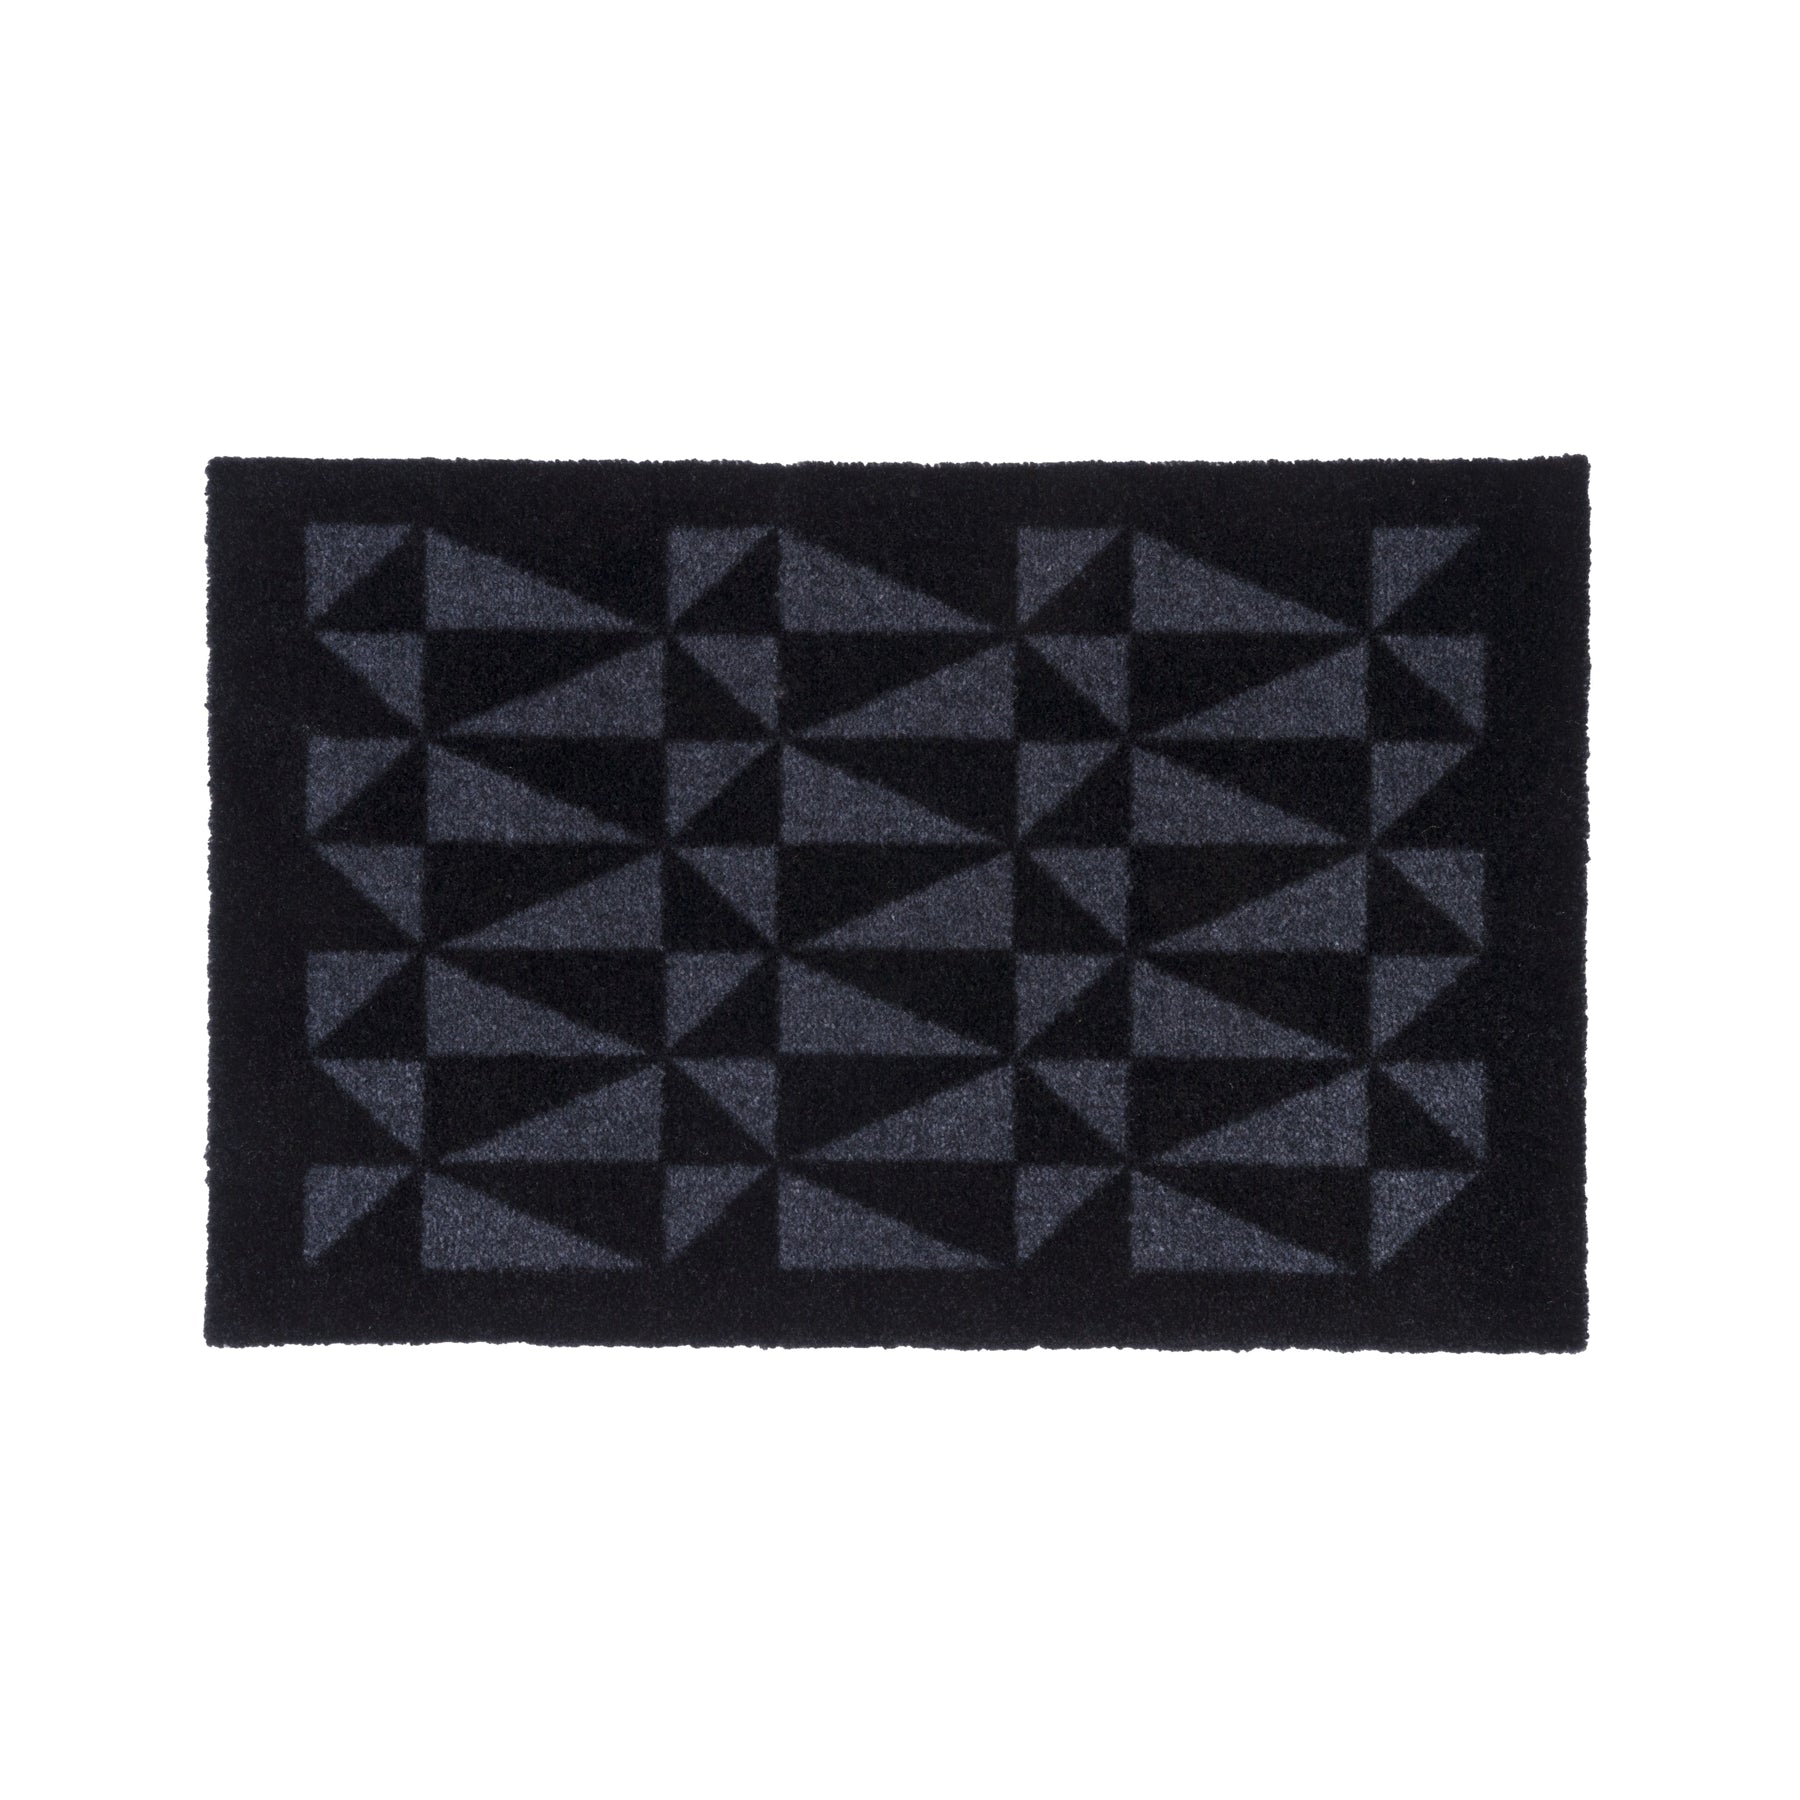 Floor mat 40 x 60 cm - Graphic/Black Gray